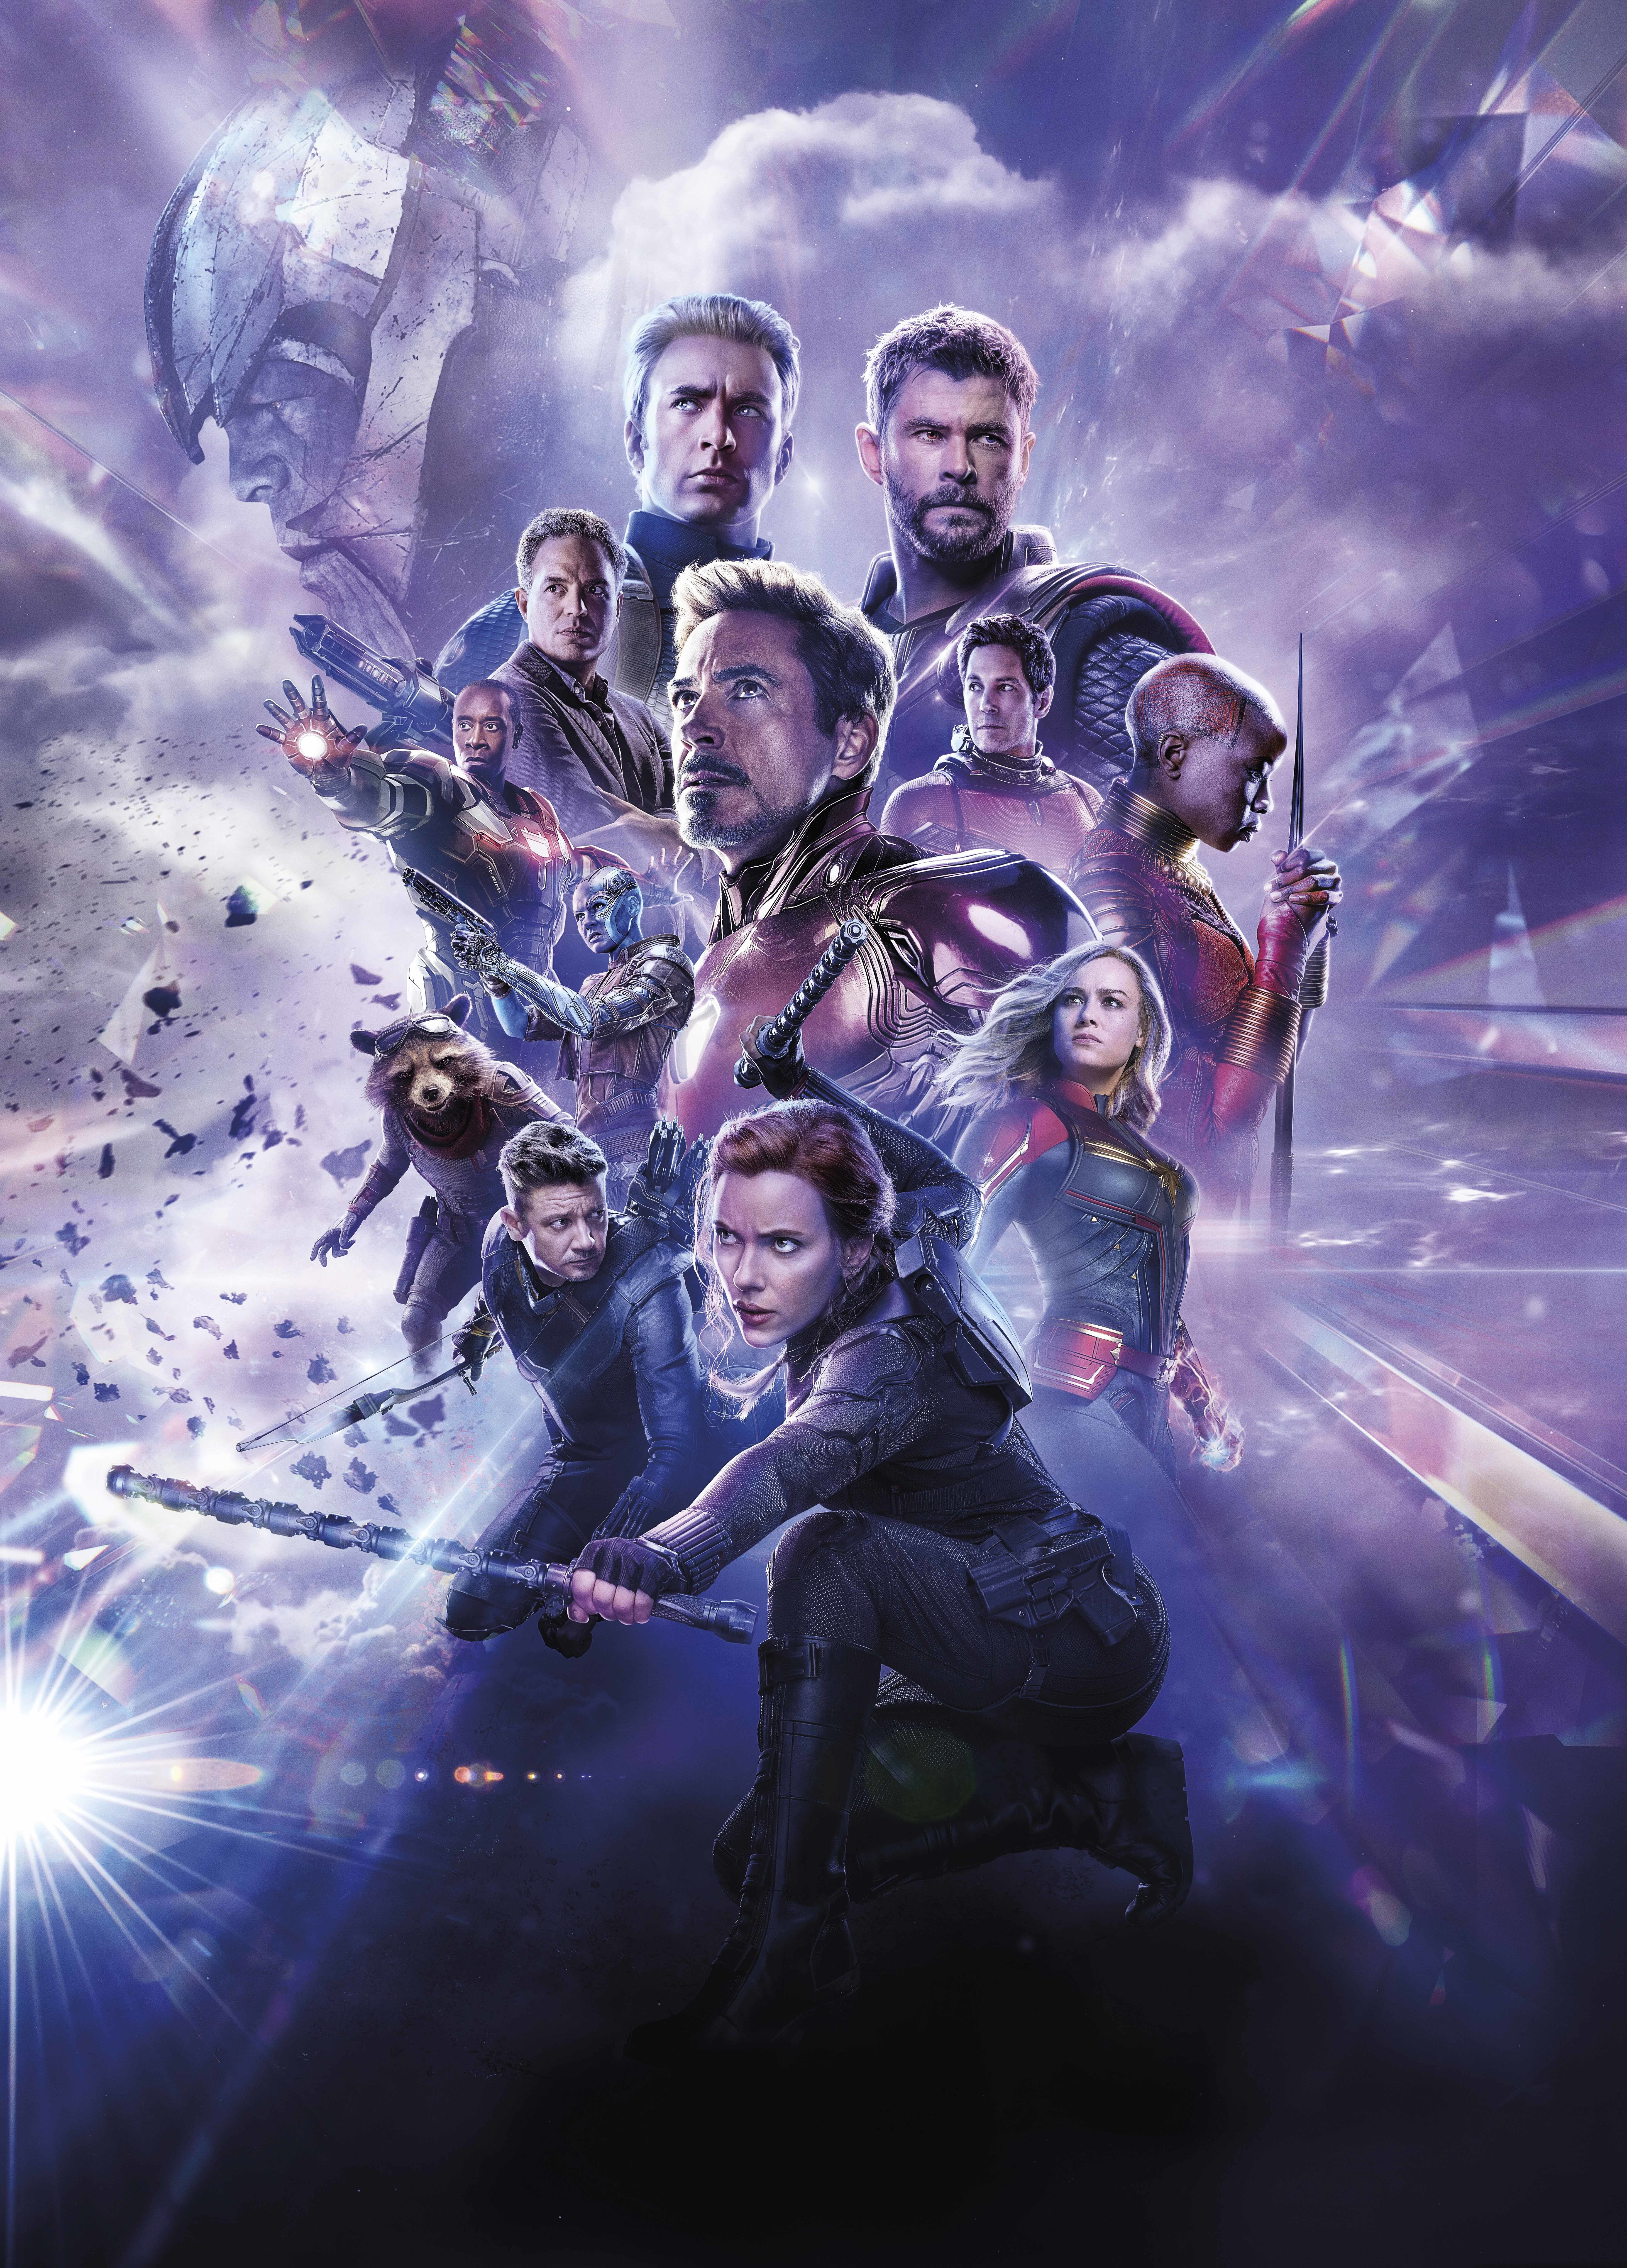  Avengers  Endgame  8K Russian Poster Wallpaper  HD Movies 4K  